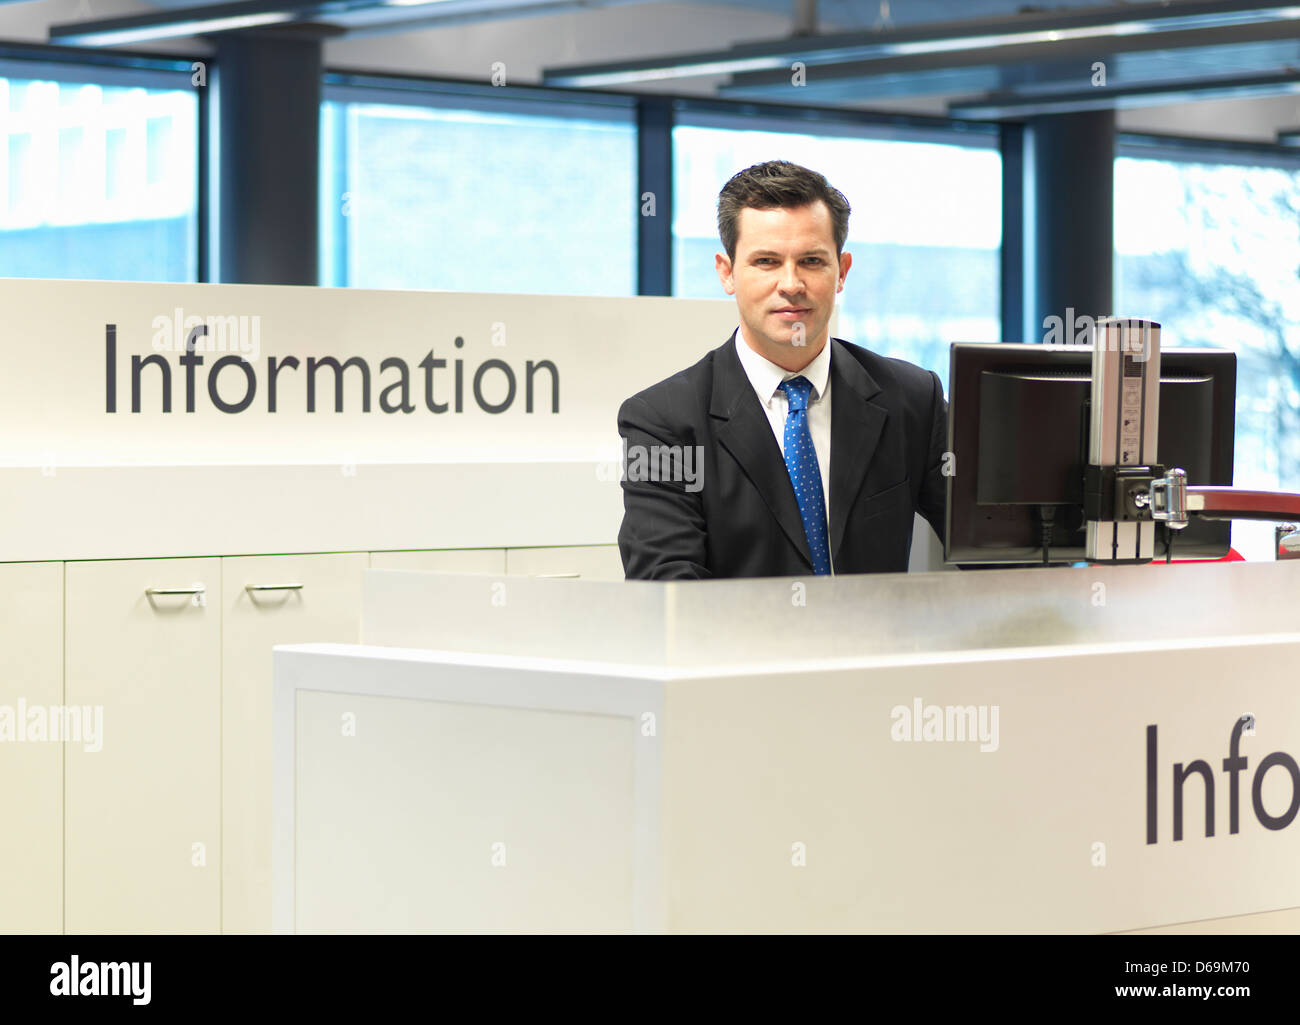 Réceptionniste smiling at information desk Banque D'Images